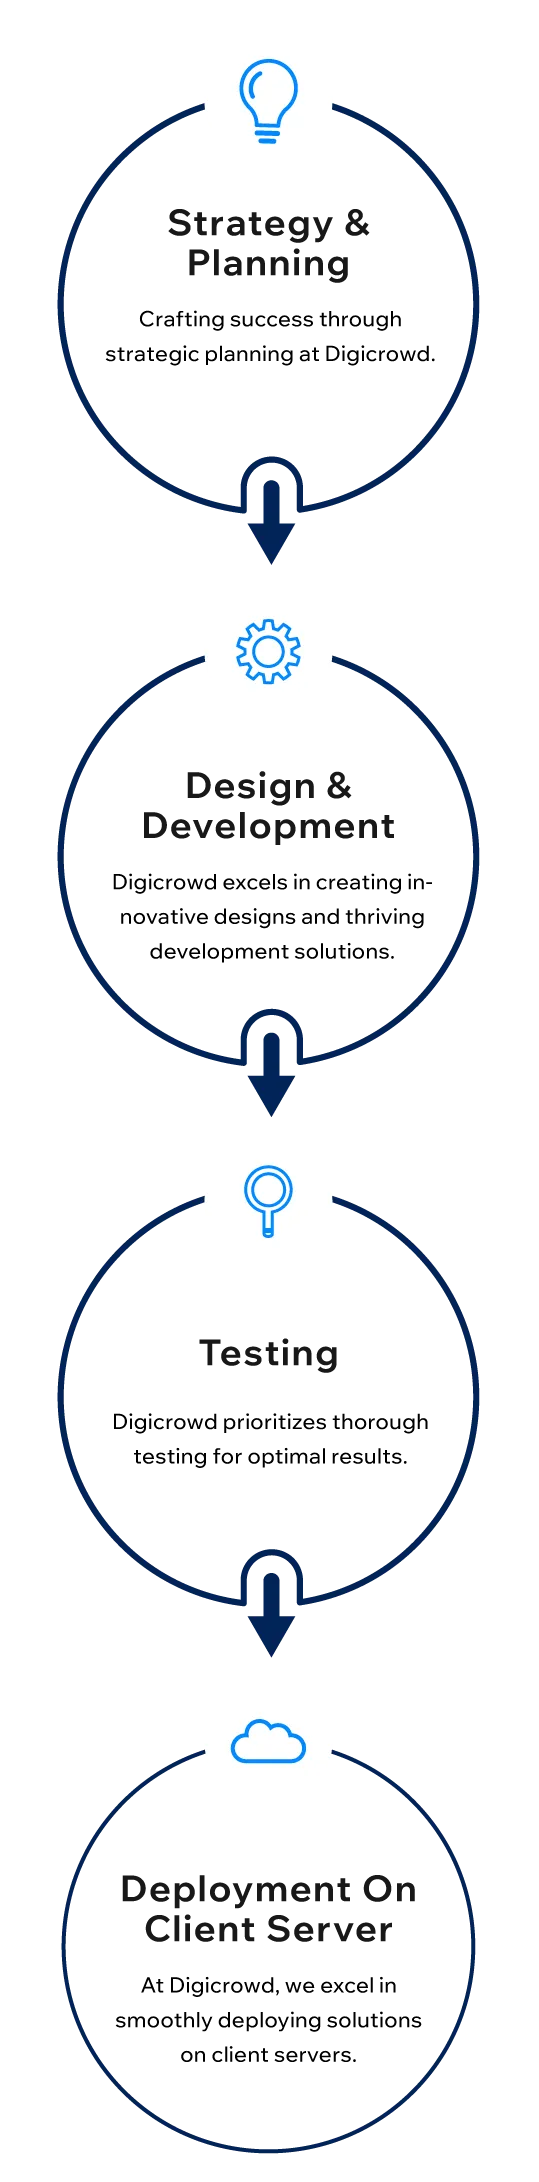 Custom Enterprise Software Development Process